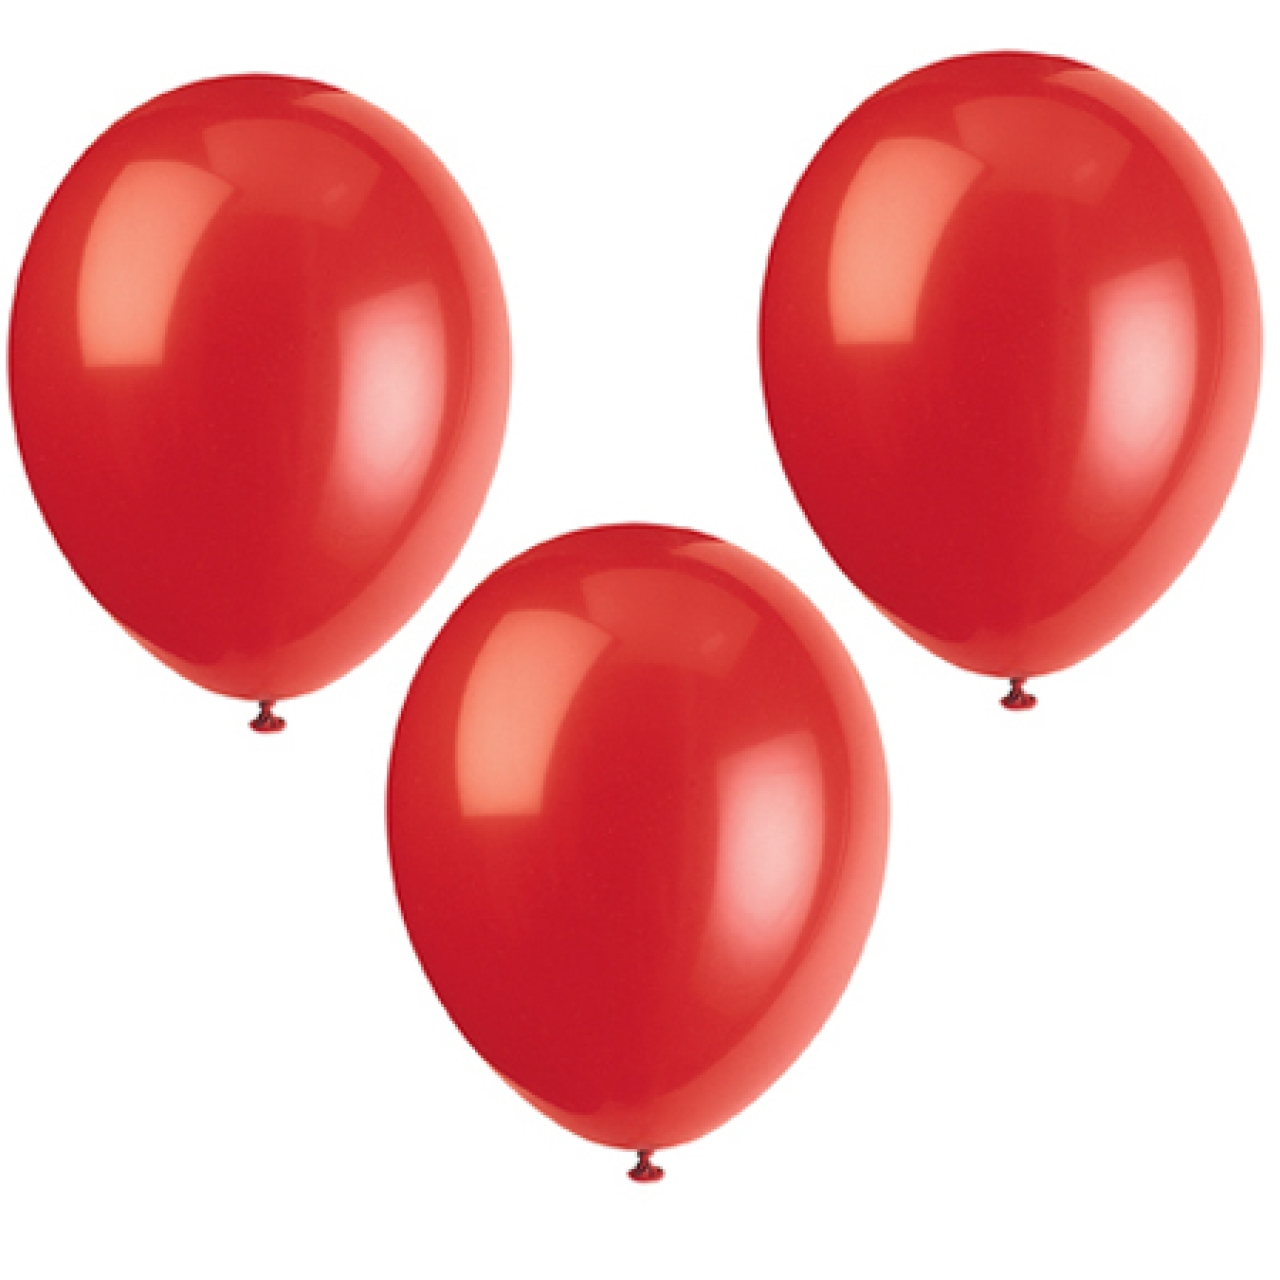 10 Party Luftballons, Farbe: Rot, 30 cm | MEINCUPCAKE Shop